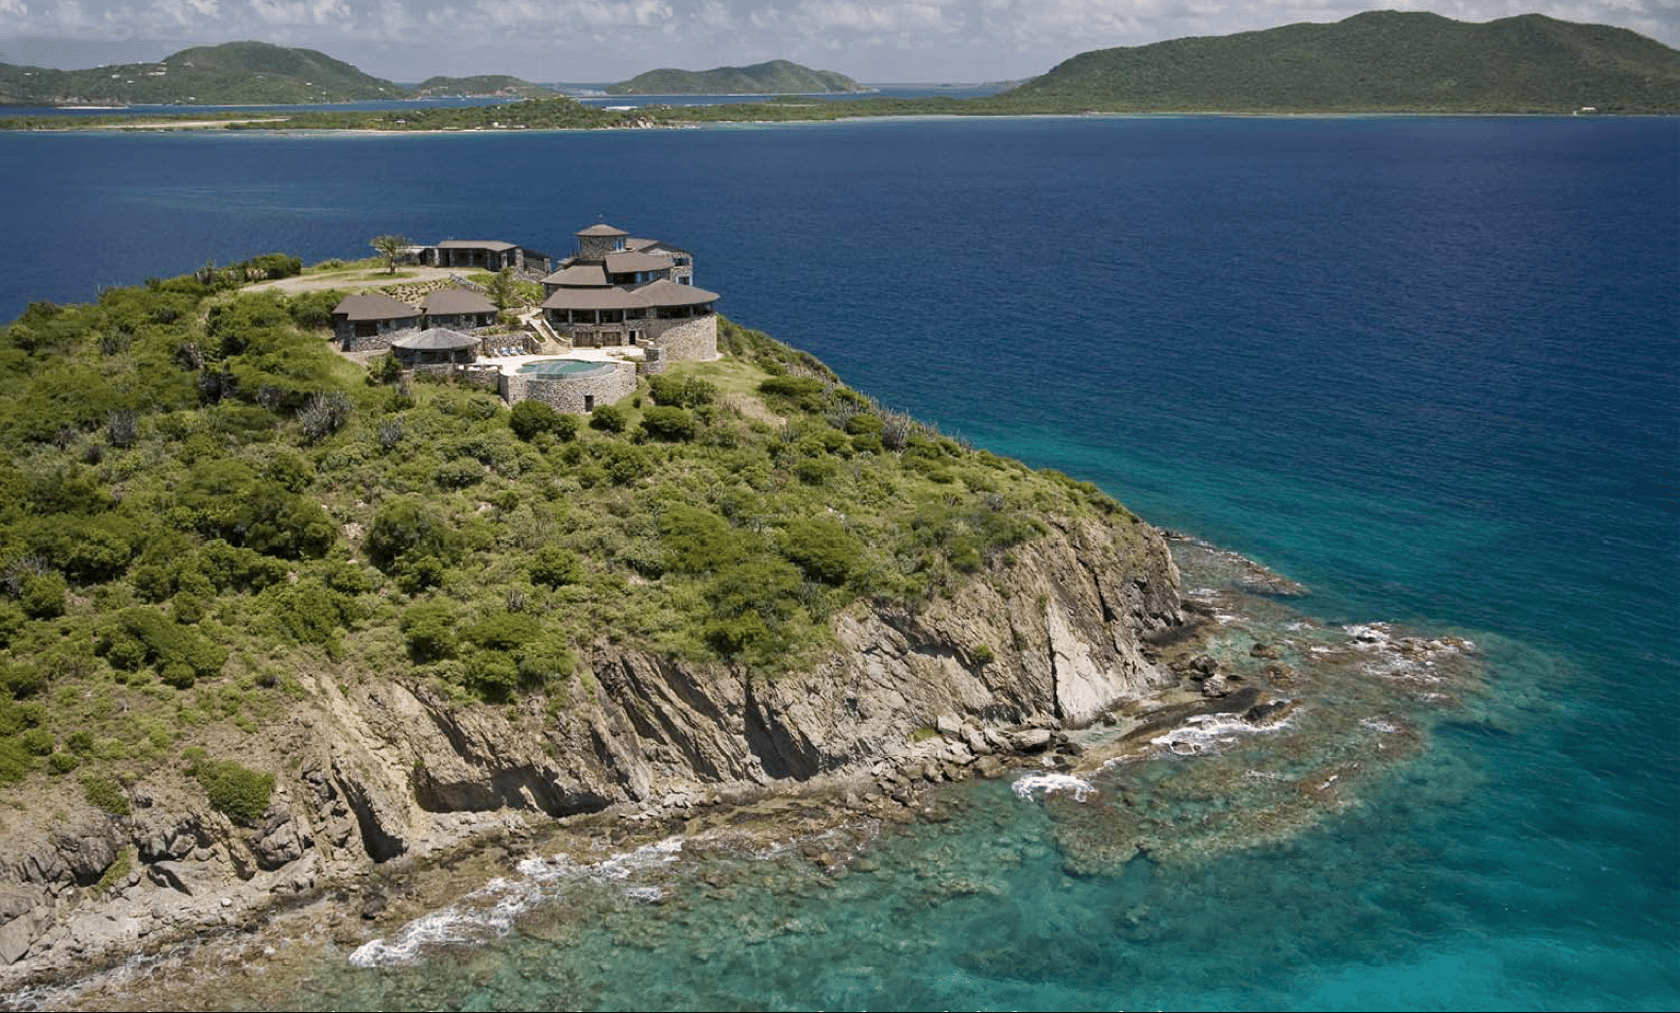 8 Private Islands for Sale: Buck Island, British Virgin Islands